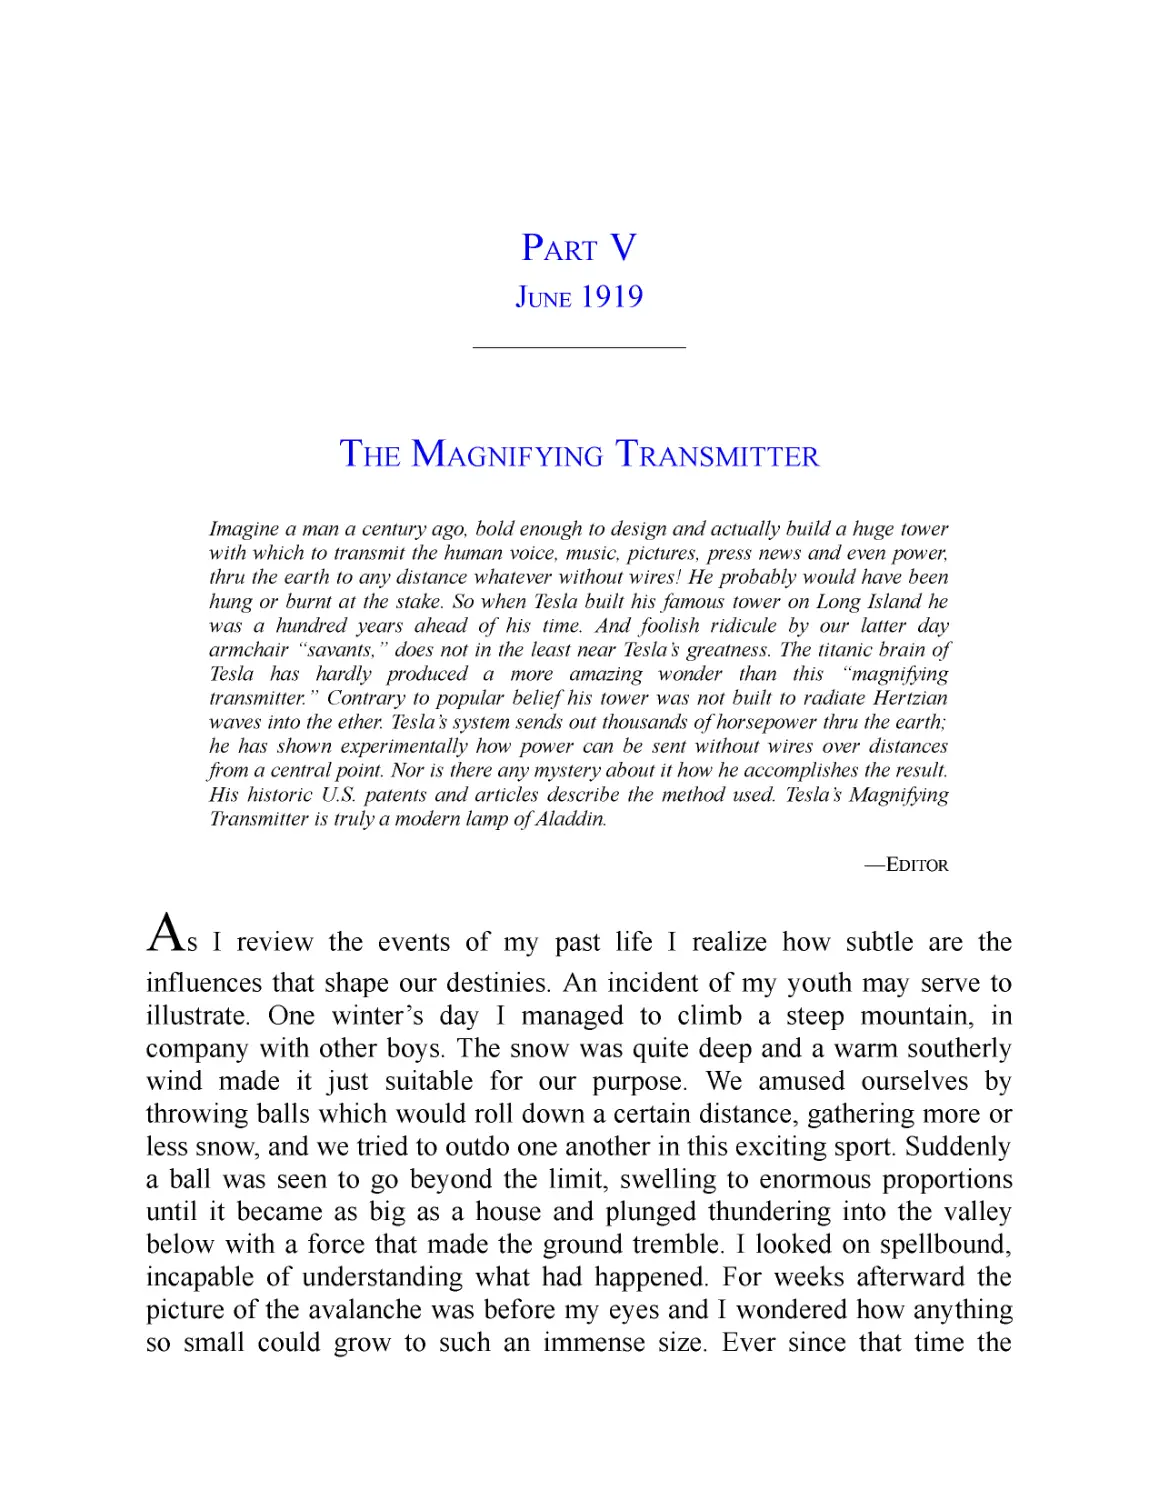 ﻿Part V: The Magnifying Transmitte